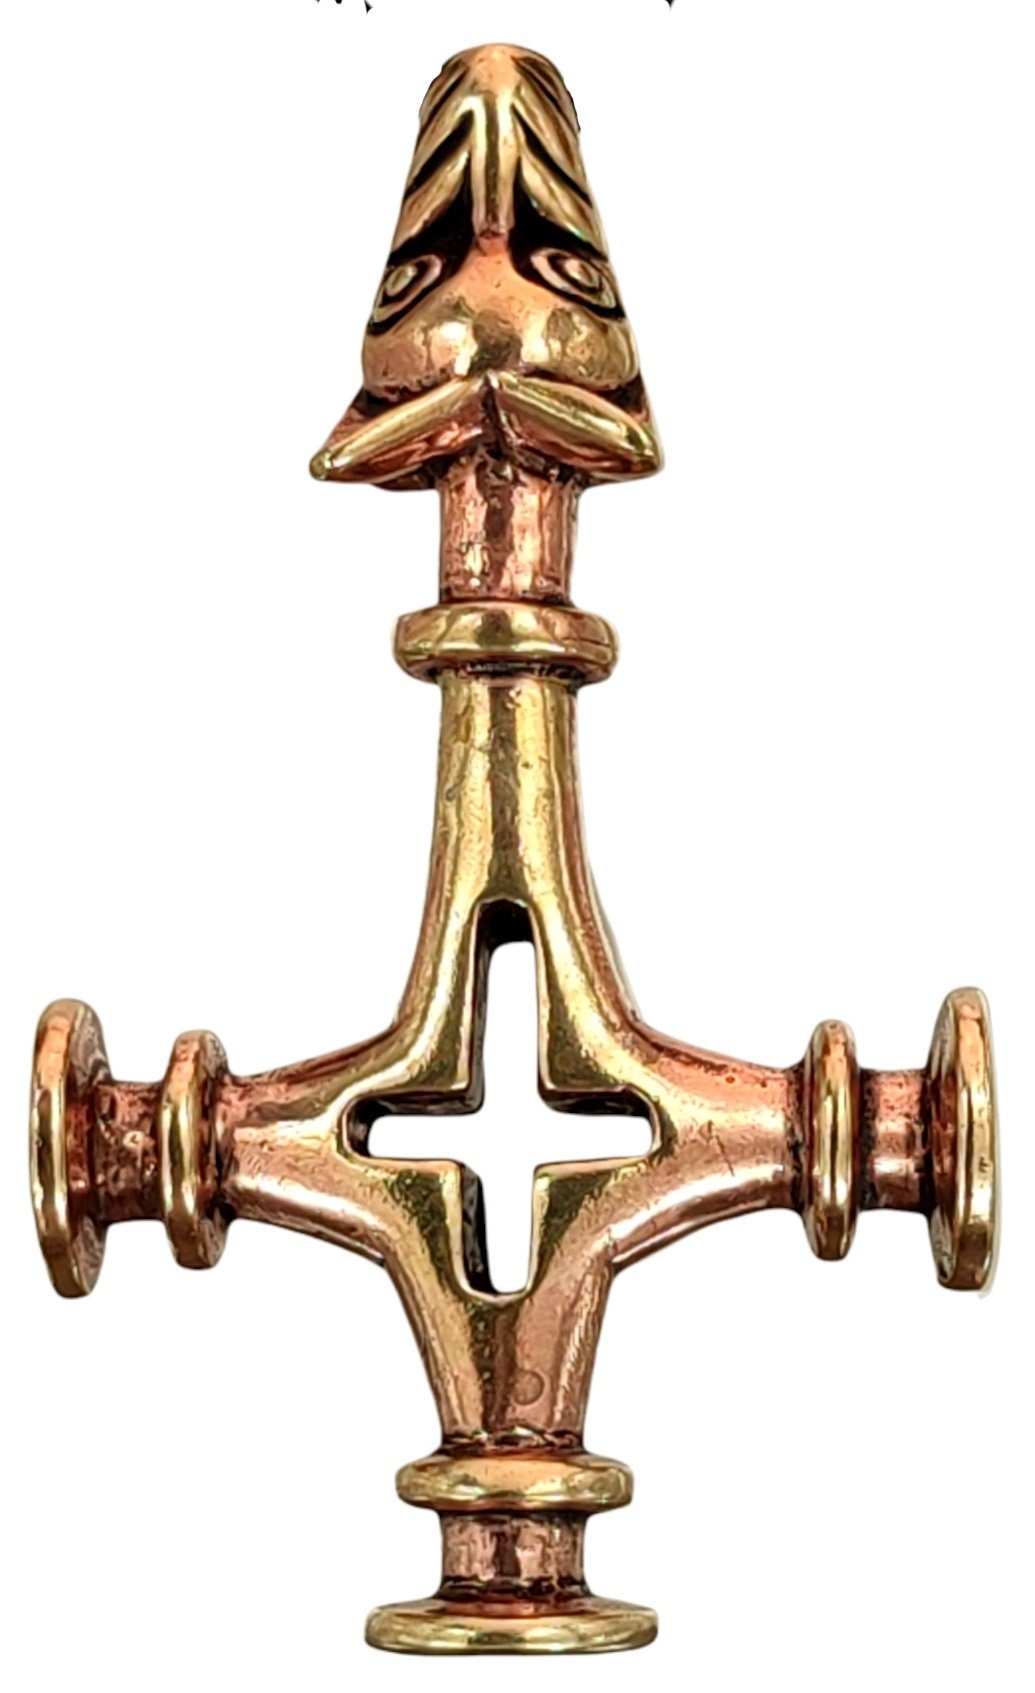 Nr. Wolfskreuz Thorshammer 73 Kiss Kettenanhänger Thorhammer XL Bronze Island Hammer Kreuz Anhänger Leather of